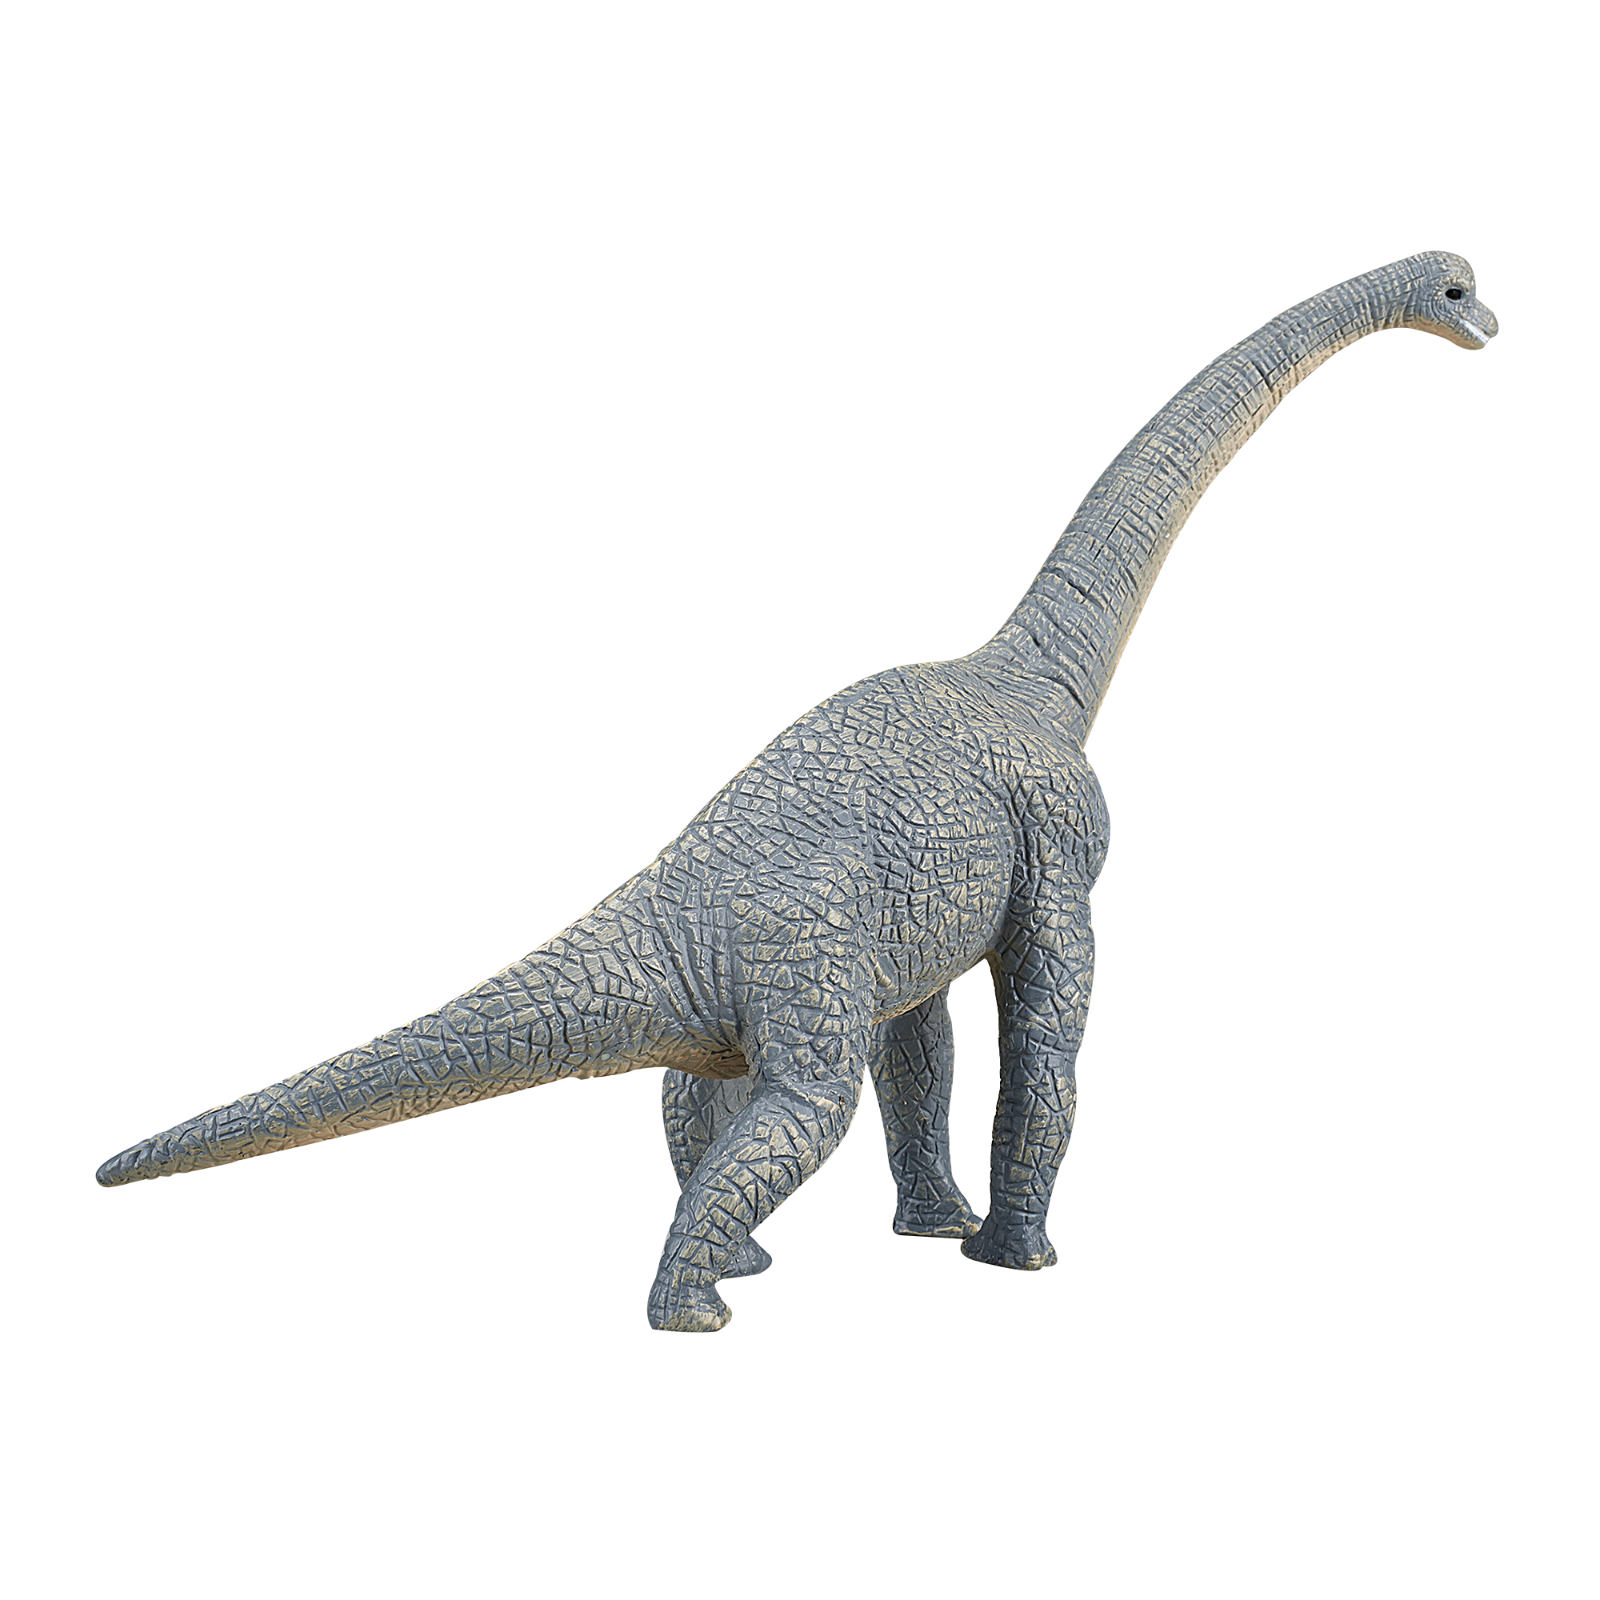 Mojo BRACHIOSAURUS DINOSAUR model figure toy Jurassic prehistoric figurine gift